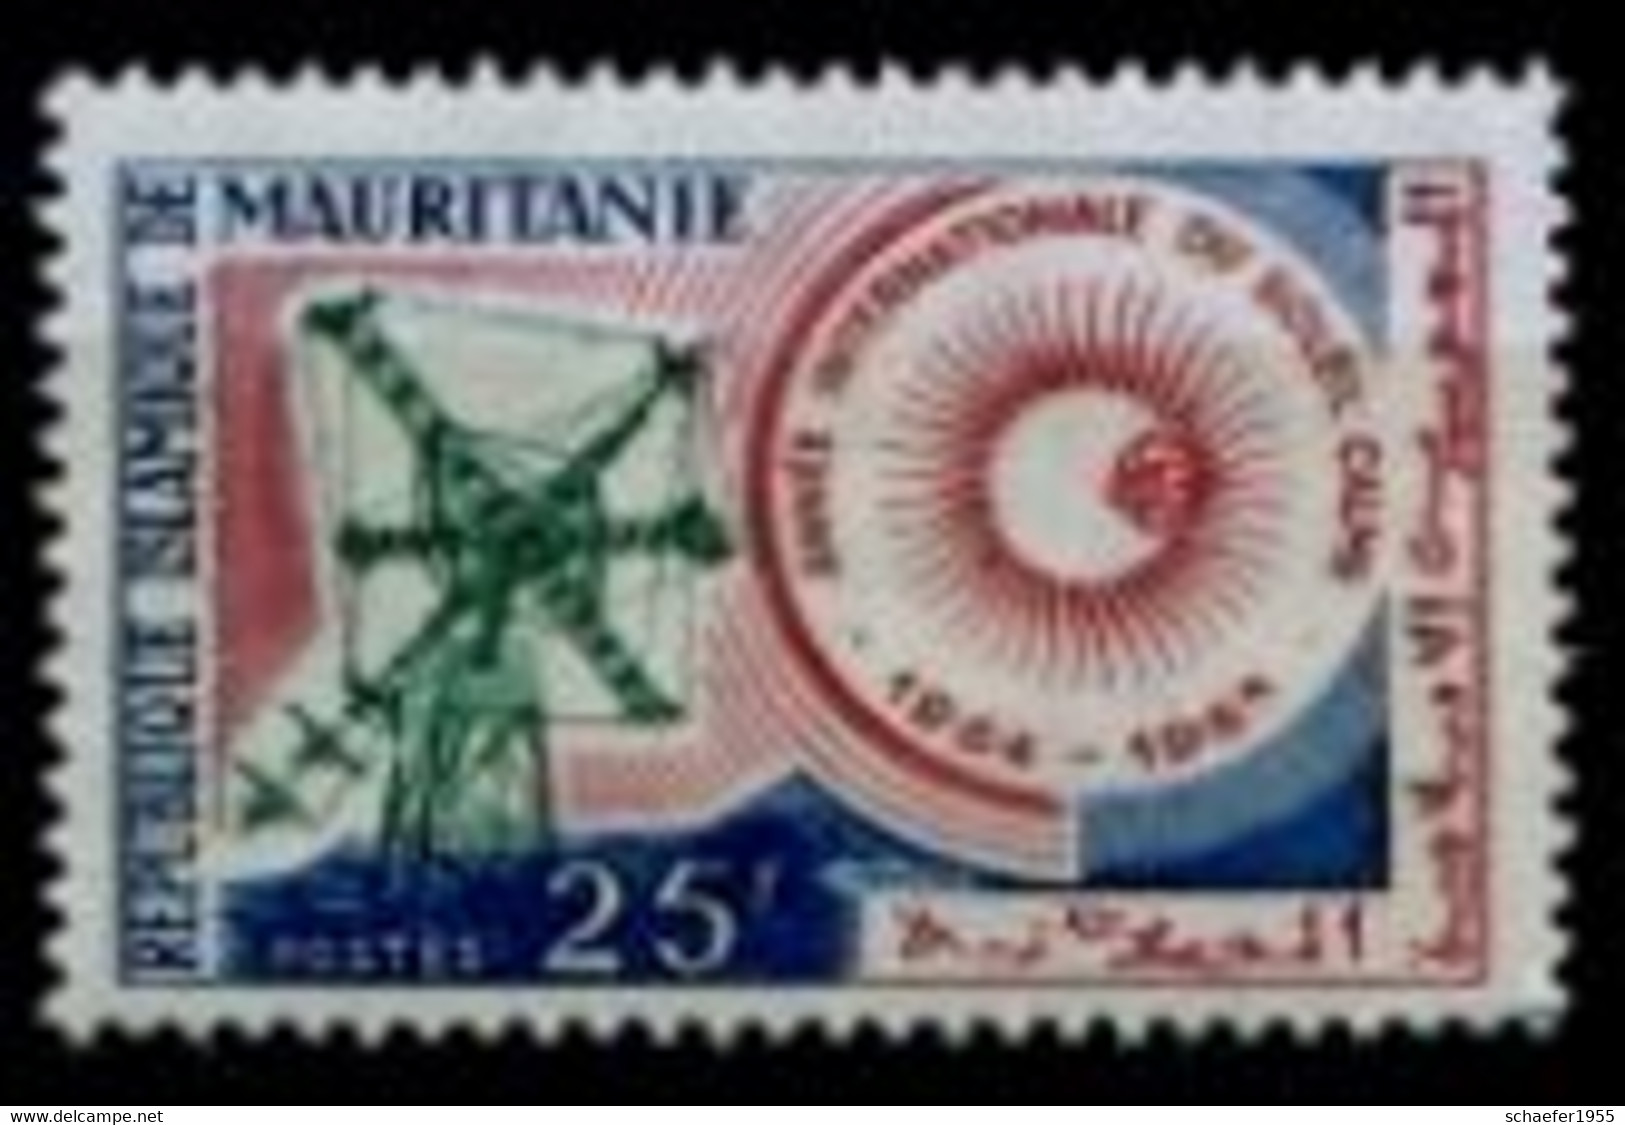 Mauritanie, Mauretanien 1964 FDC + Stamp Soleil Calme - Afrique